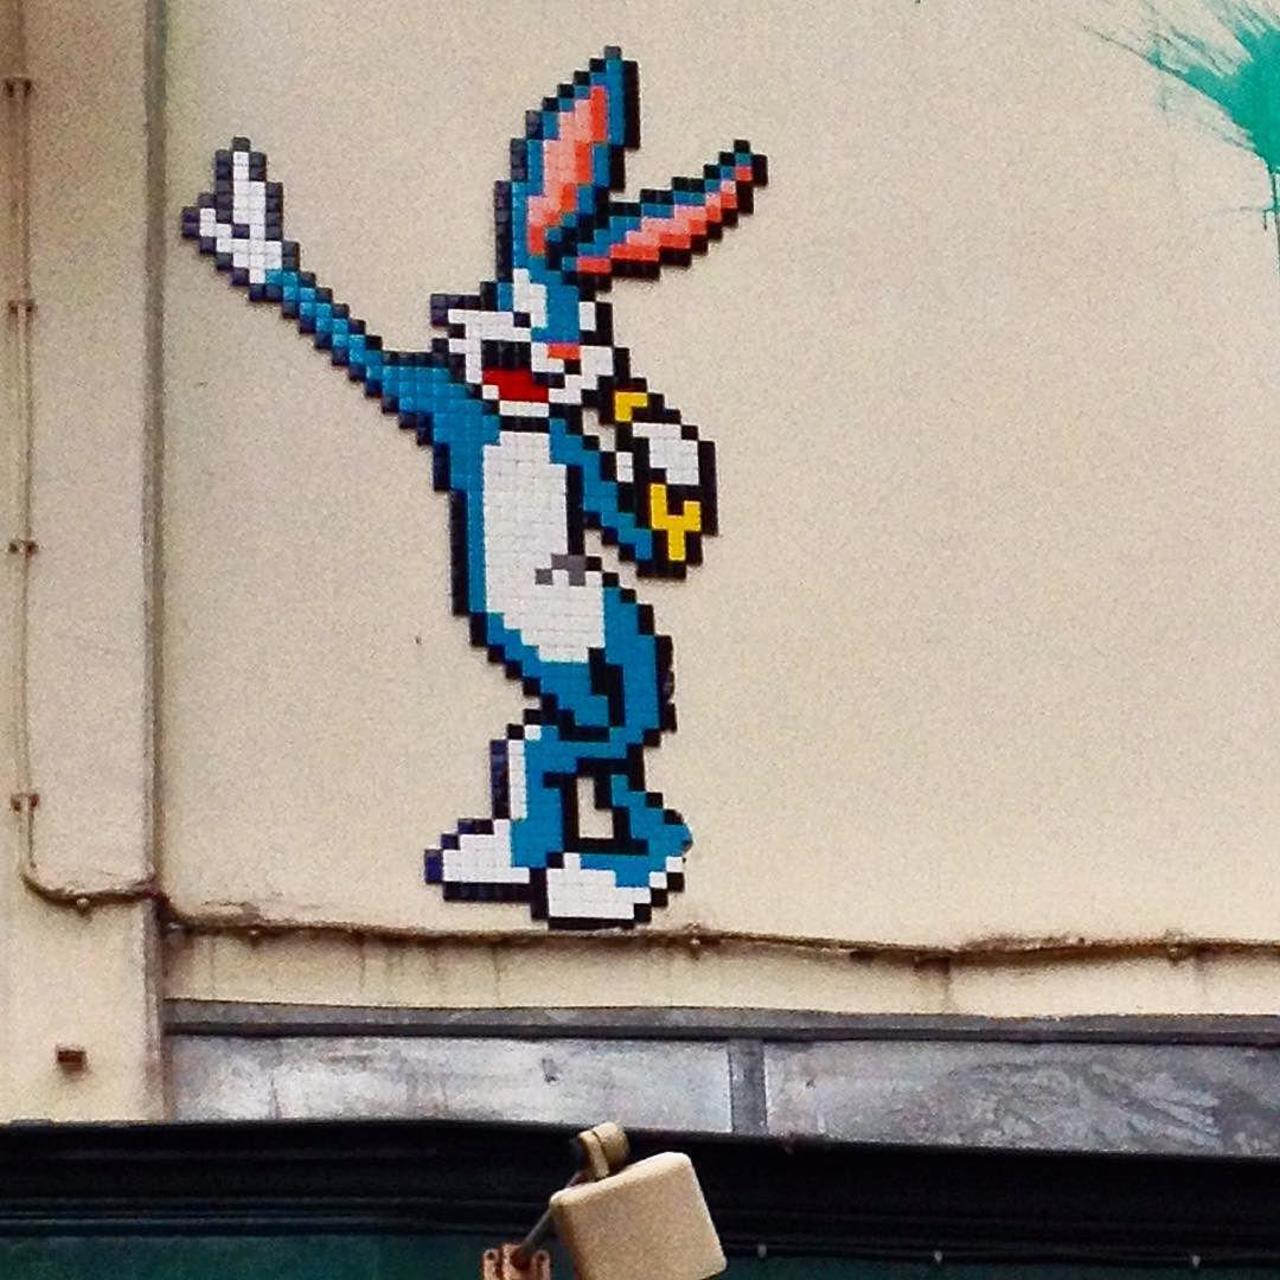 #Paris #graffiti photo by @regrinder http://ift.tt/1JvgH9w #StreetArt http://t.co/YfemeS8ozF